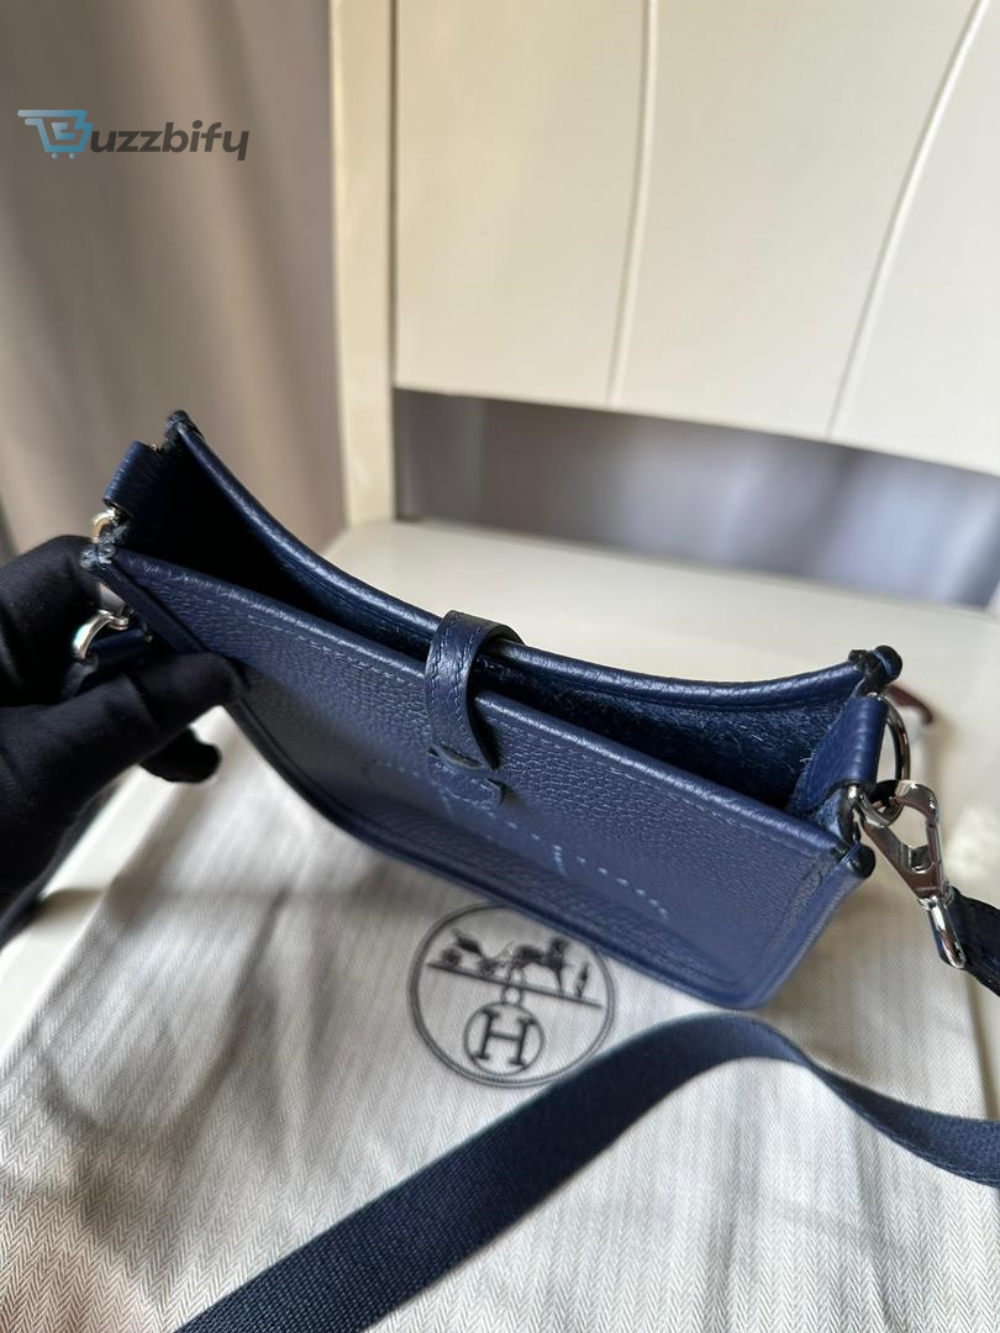 Hermes Kelly 40 cm handbag in blue box leather